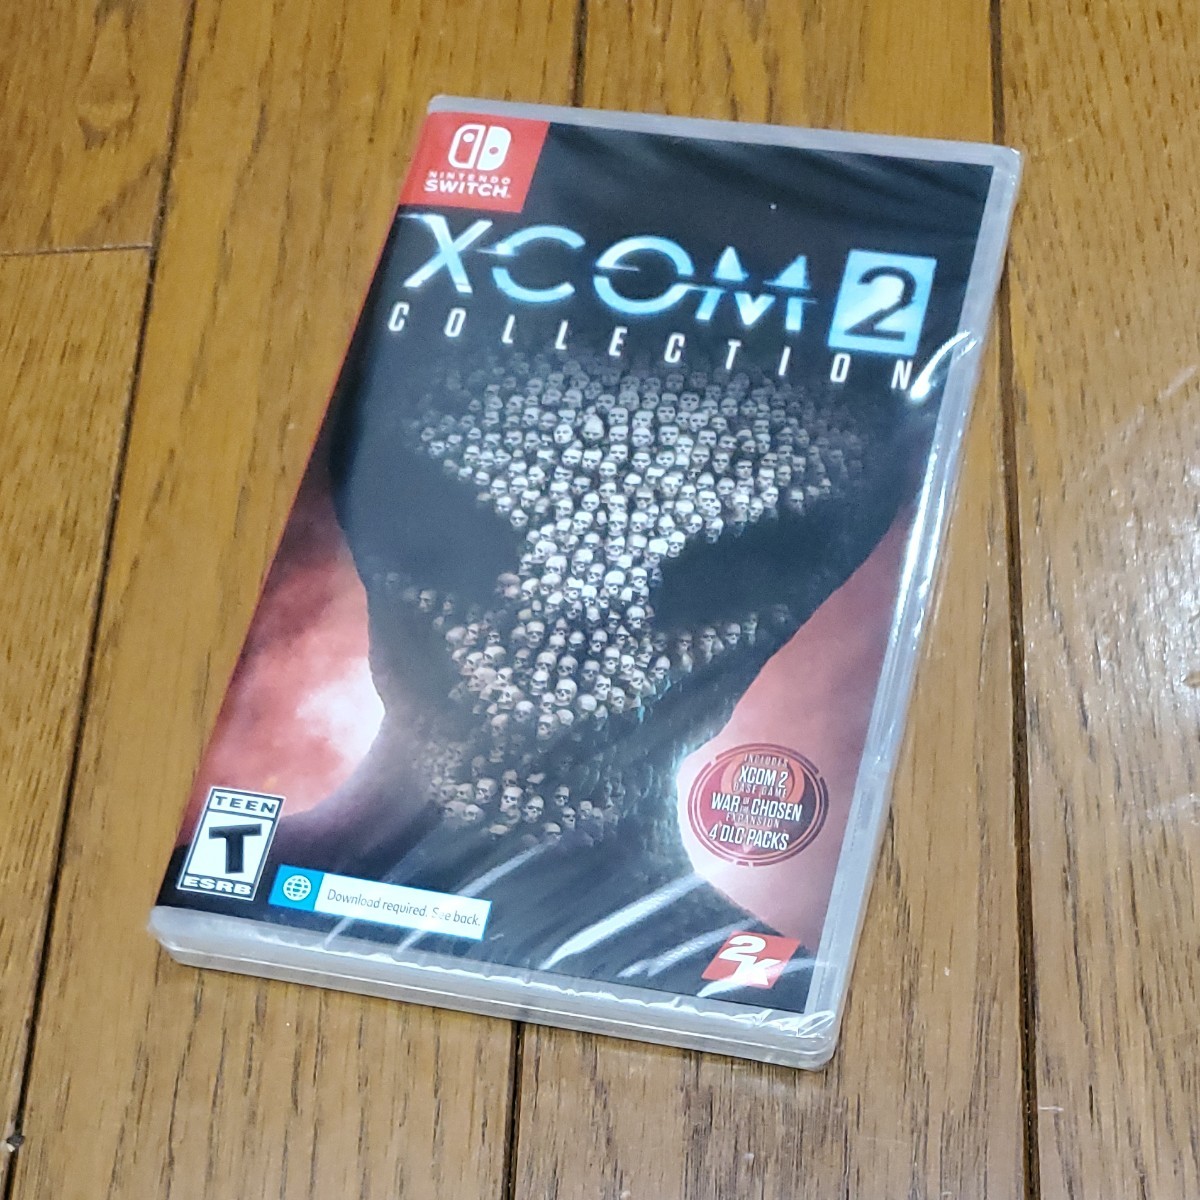 Switch XCOM2 COLLECTION